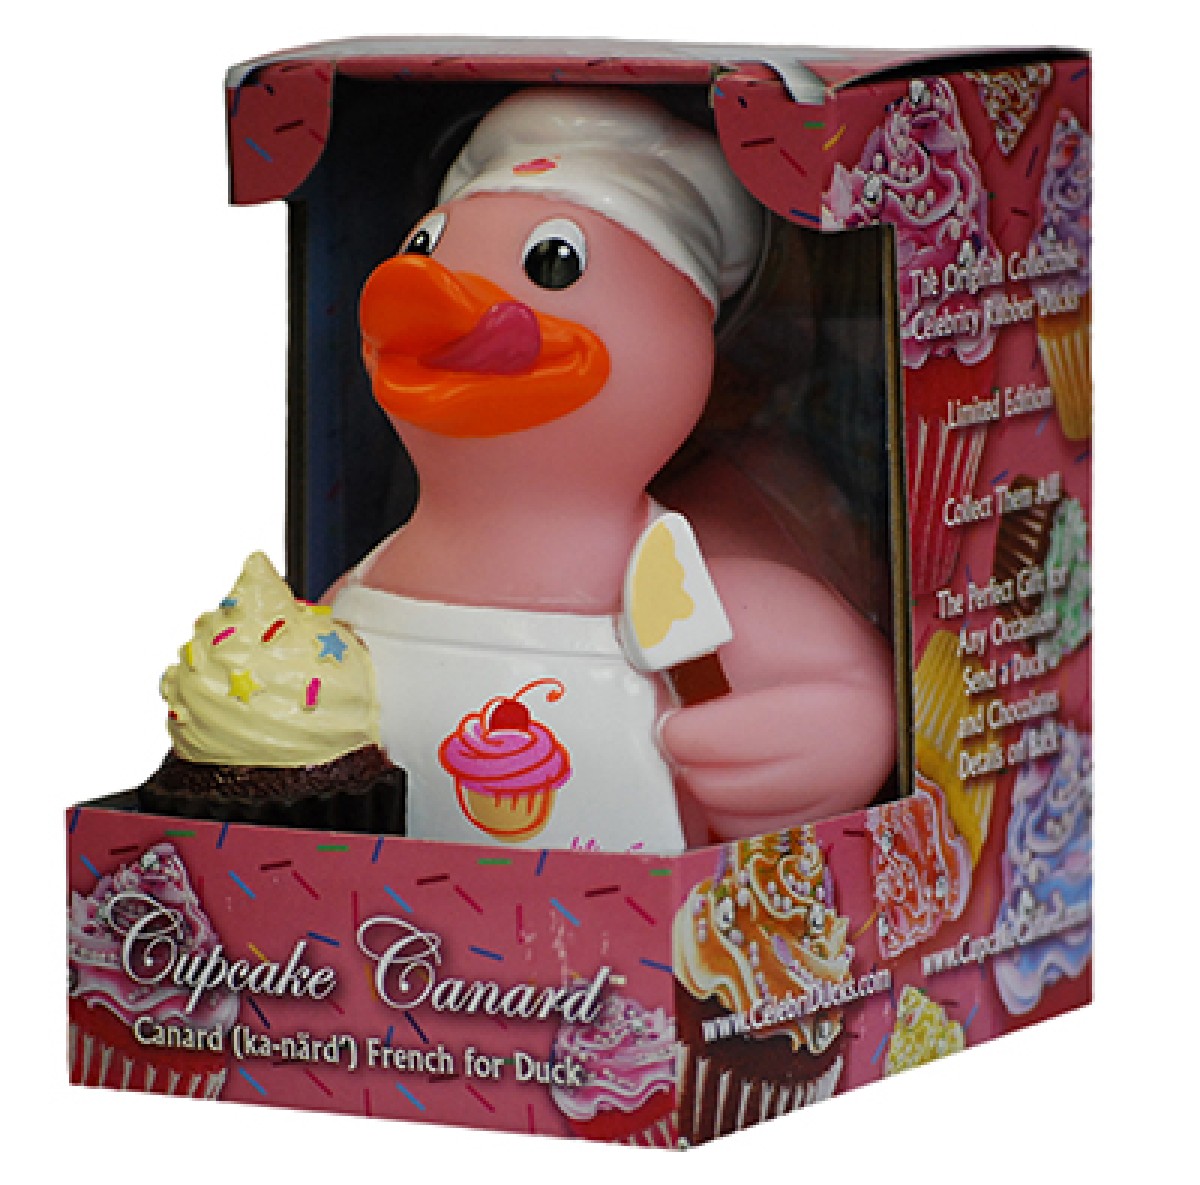 Food Themed Custom Rubber Ducks Hit the Market! .